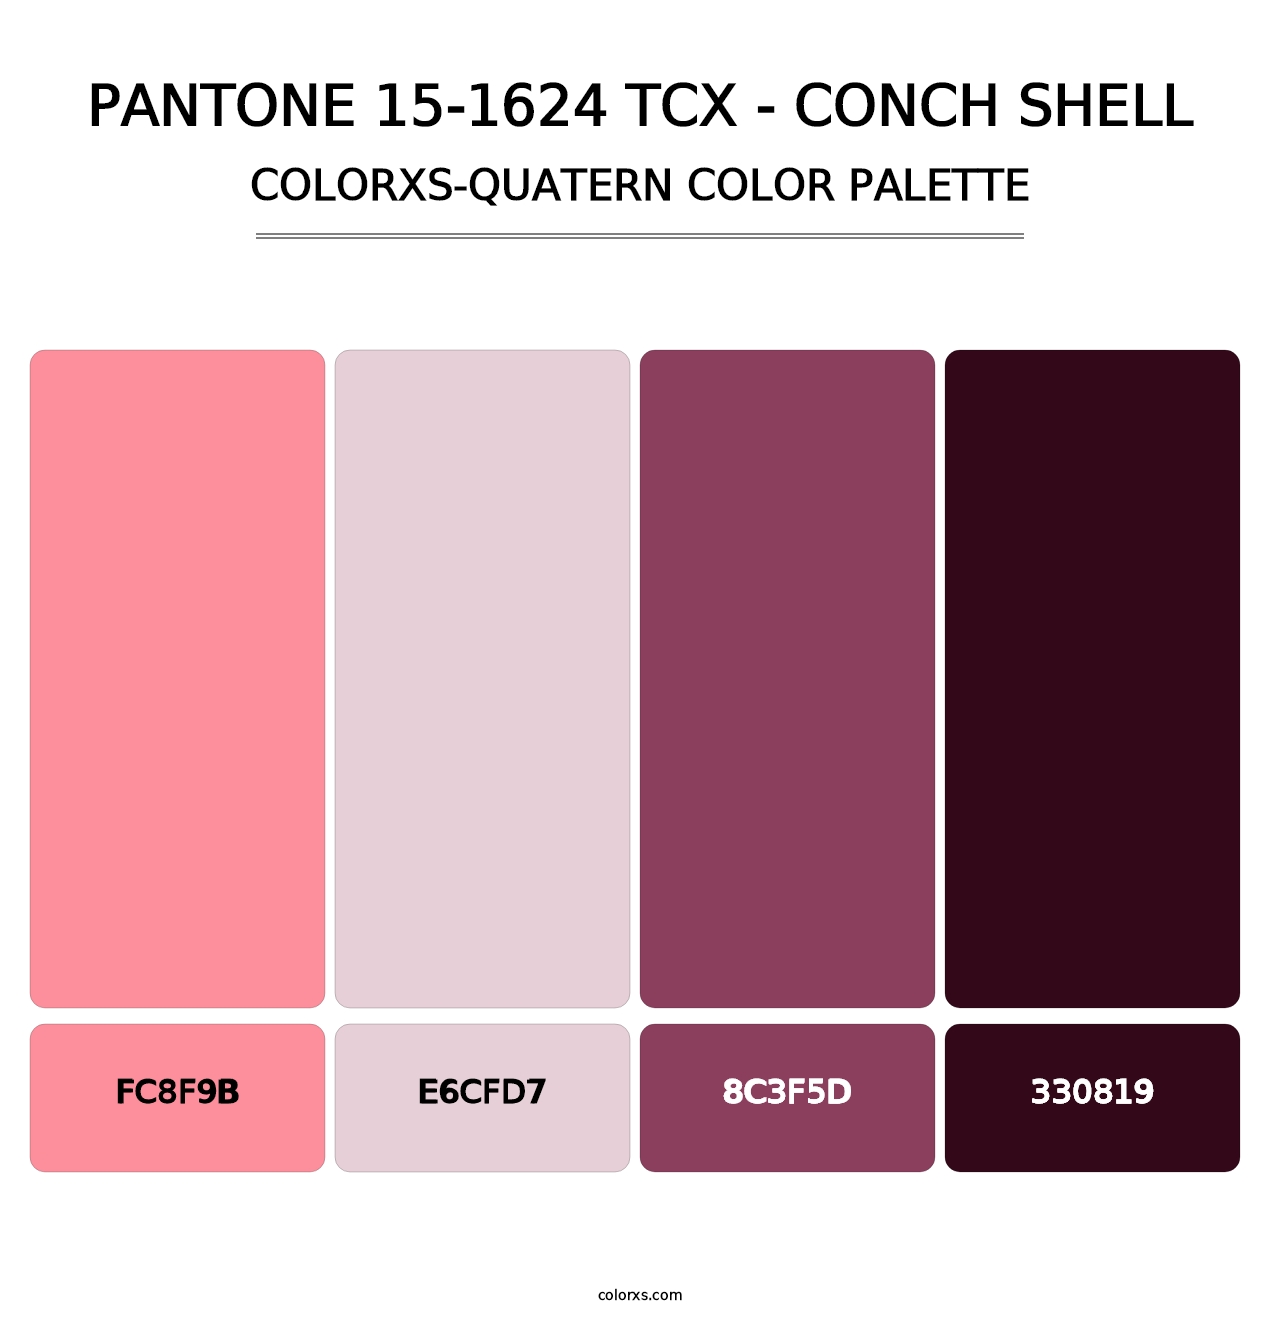 PANTONE 15-1624 TCX - Conch Shell - Colorxs Quatern Palette